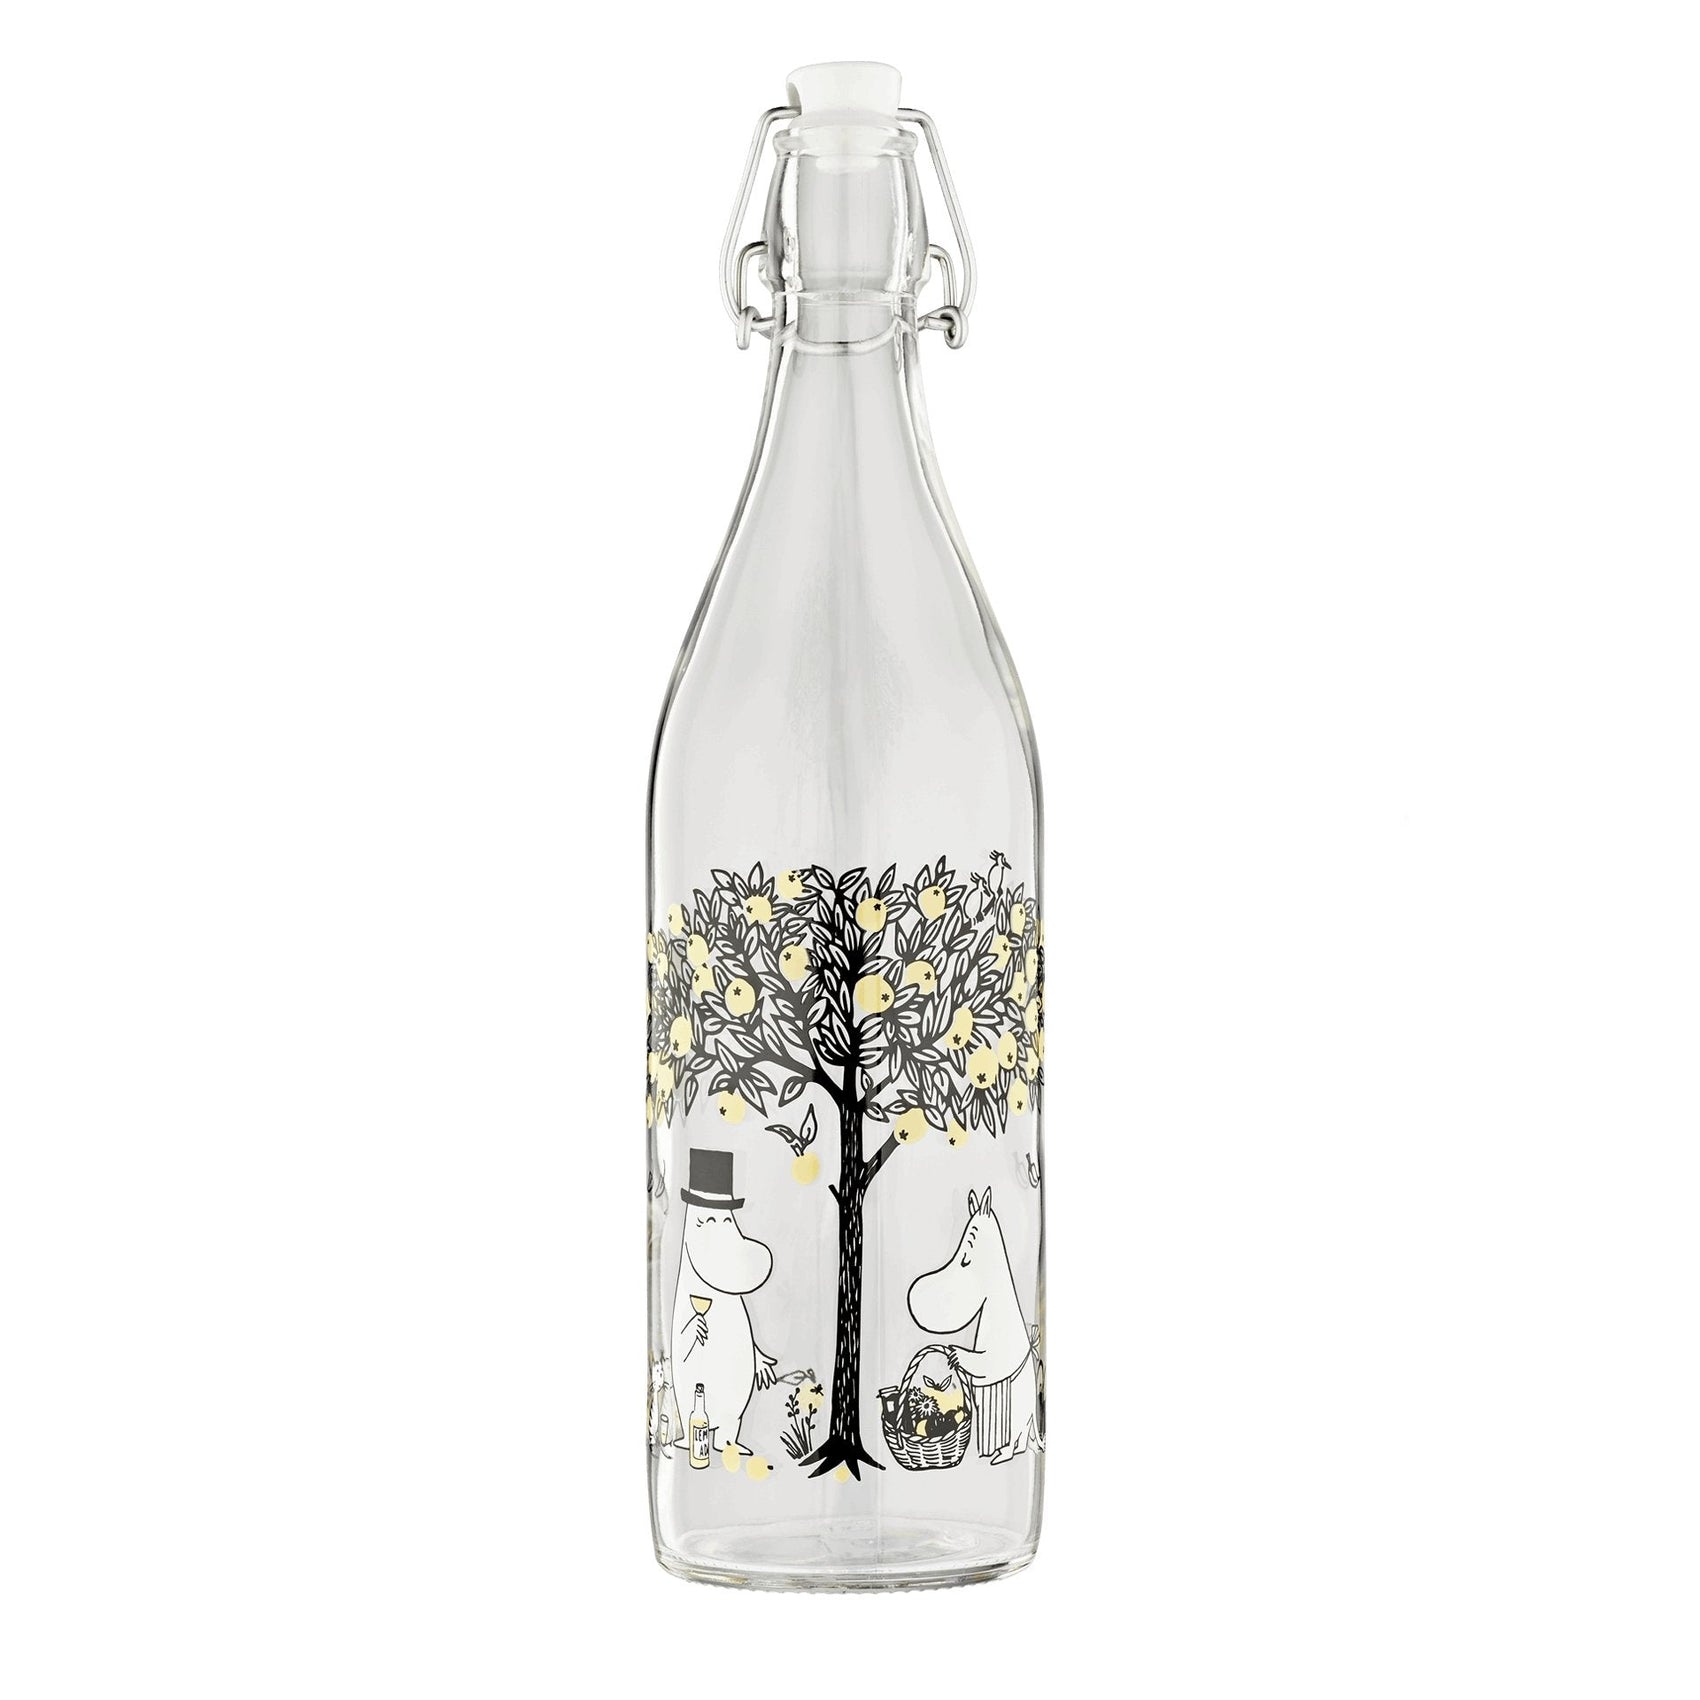 The Moomins glass bottle 1L Apples